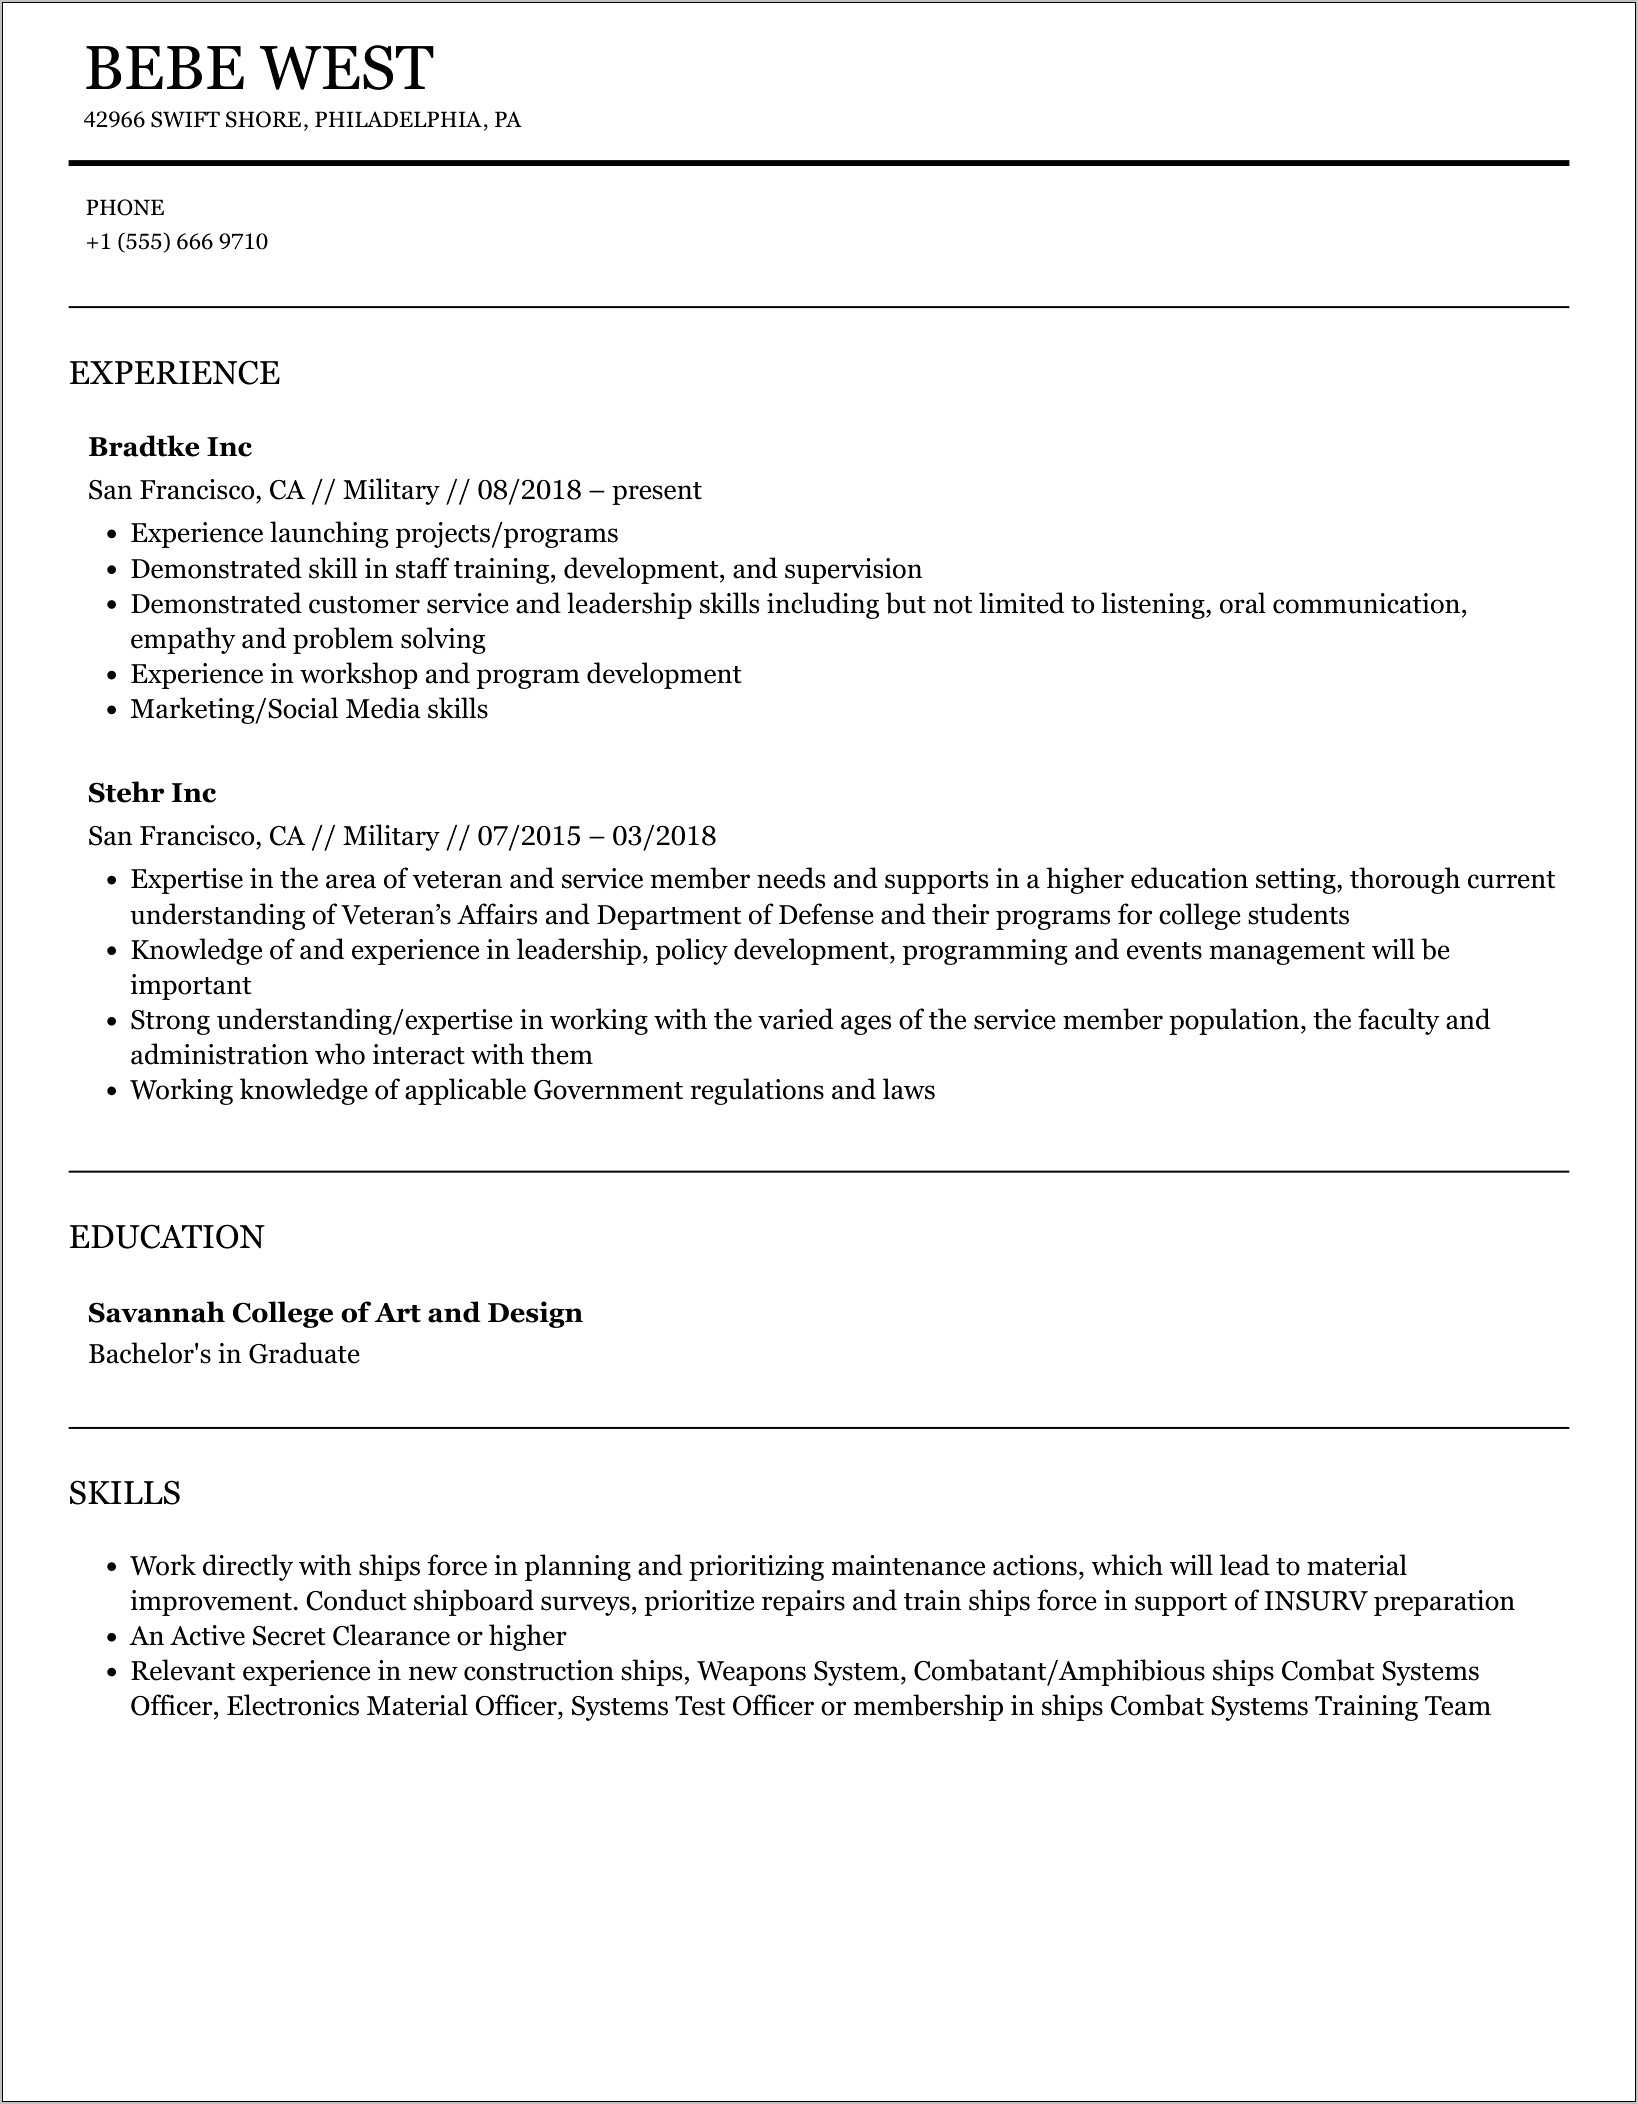 Sample Resume For The Military Spouse Preference Program - Resume ...